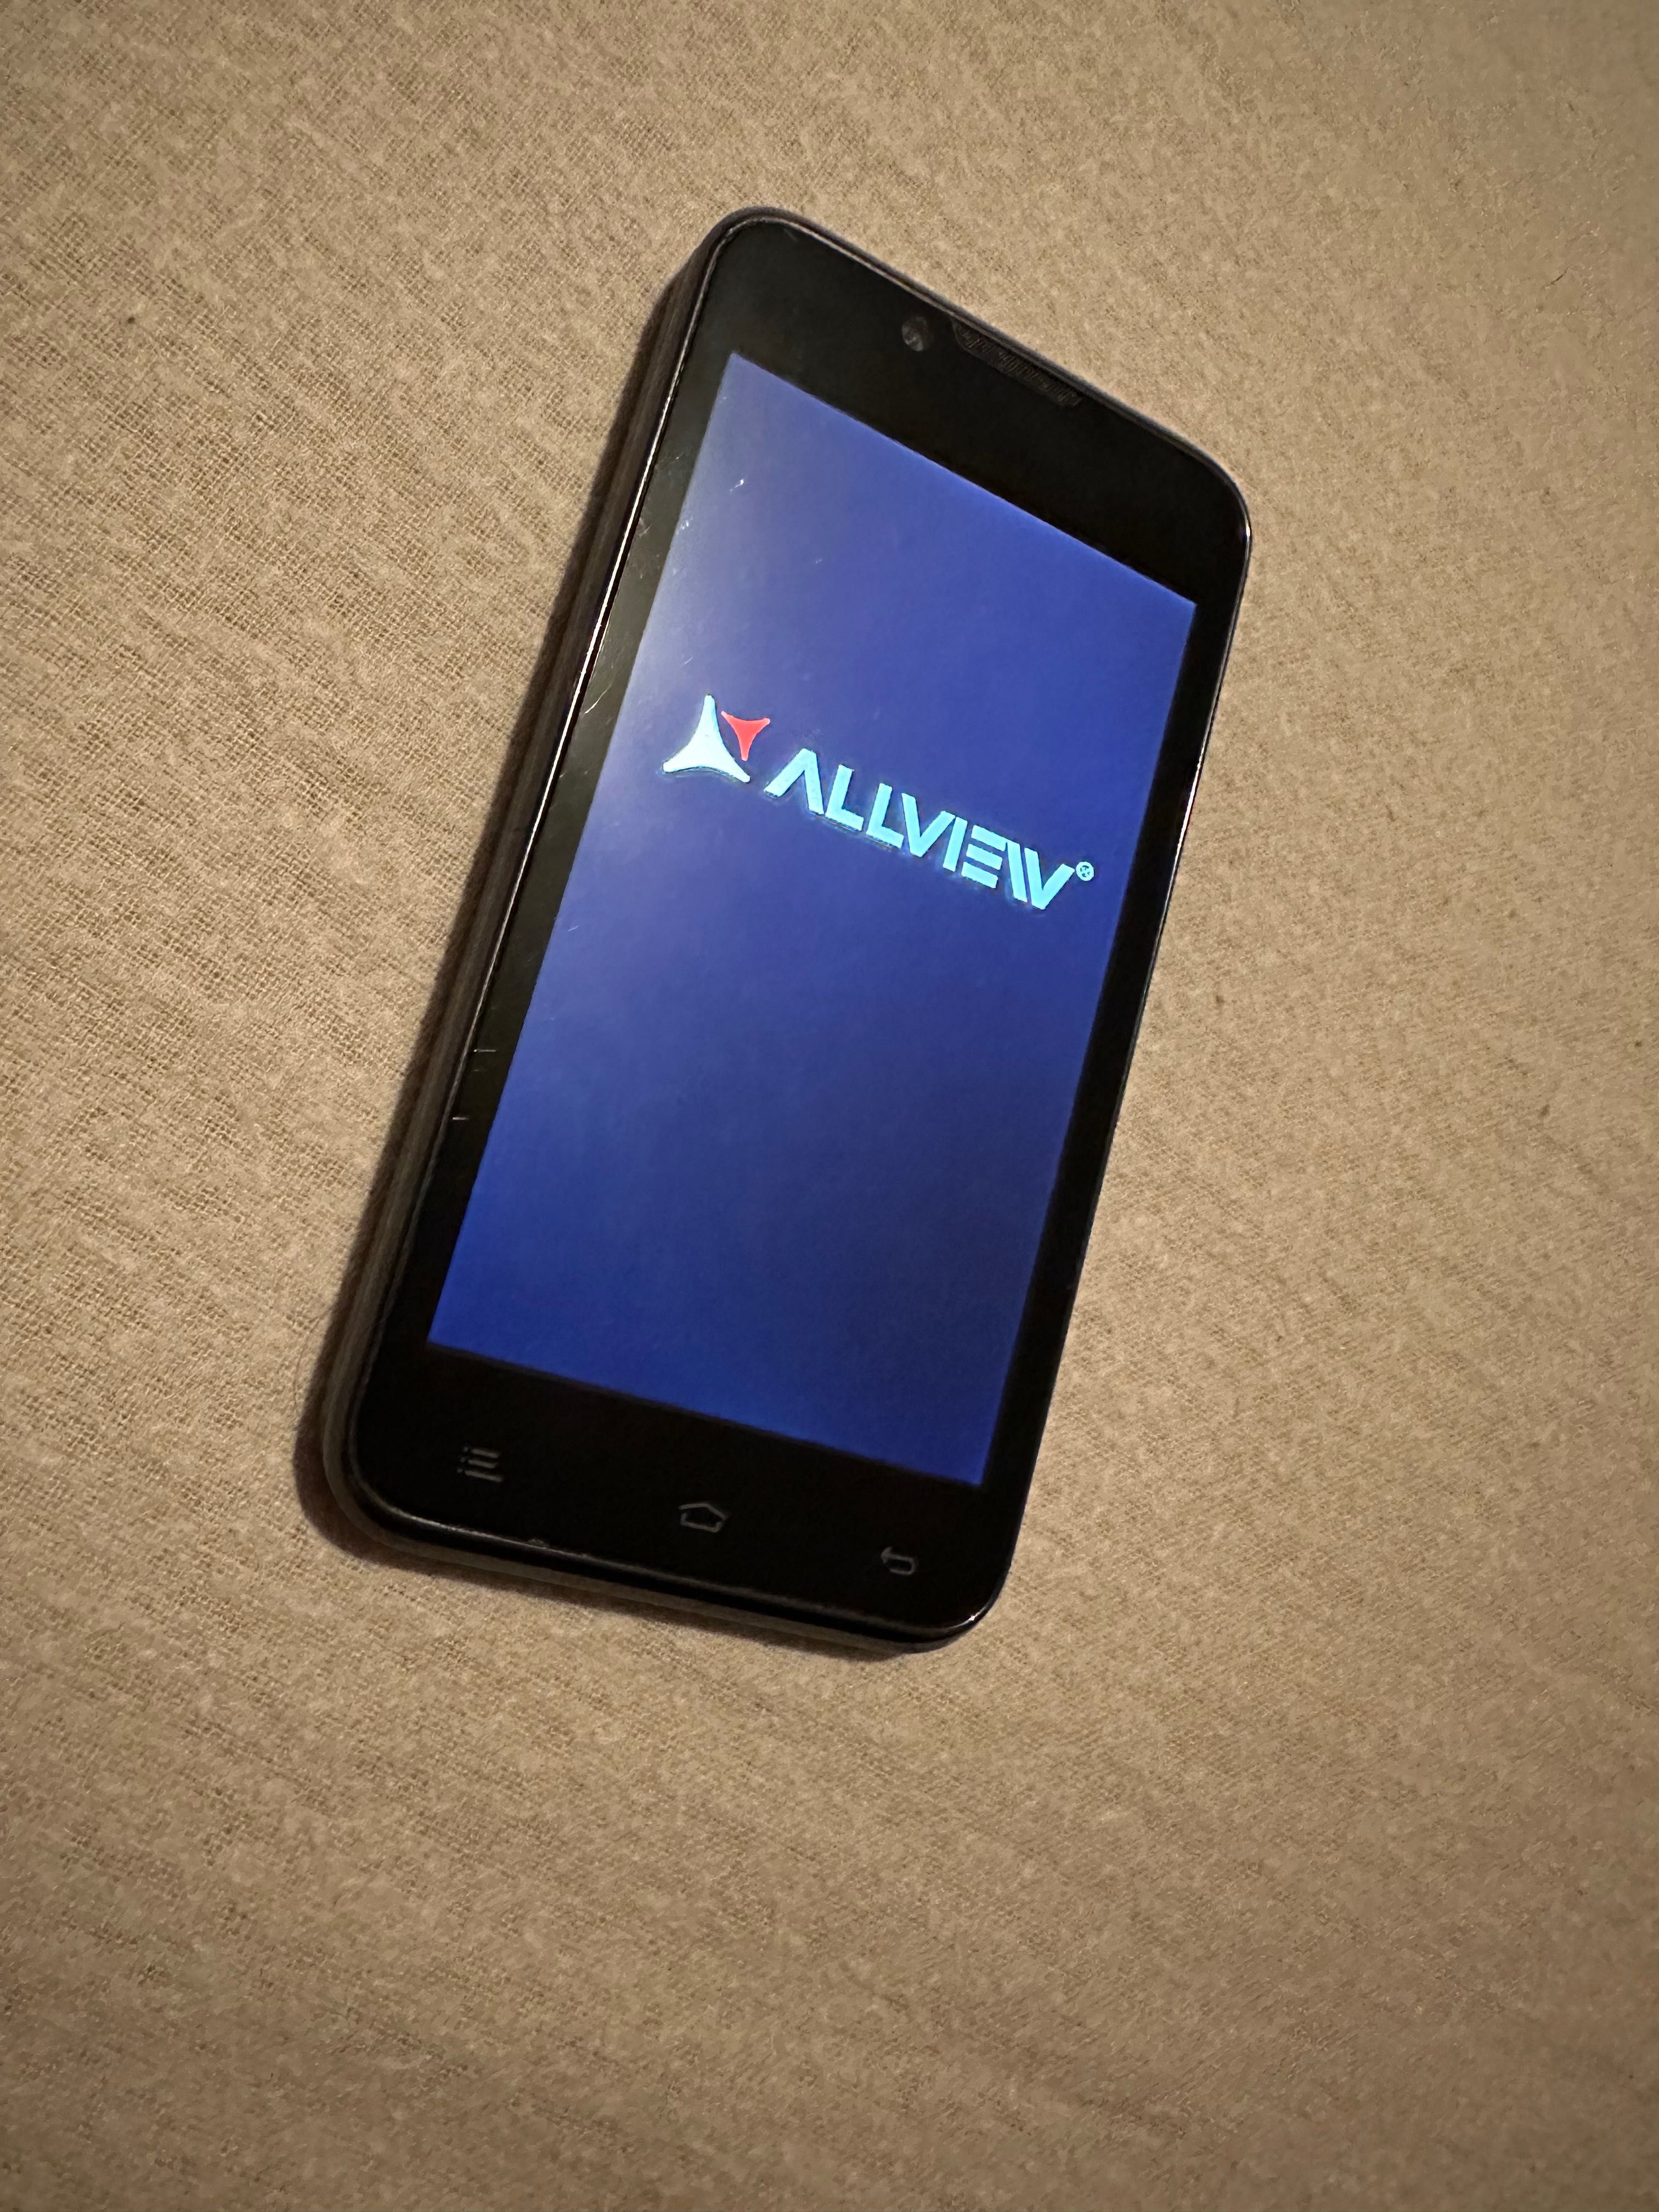 Smartphone allview dual sim